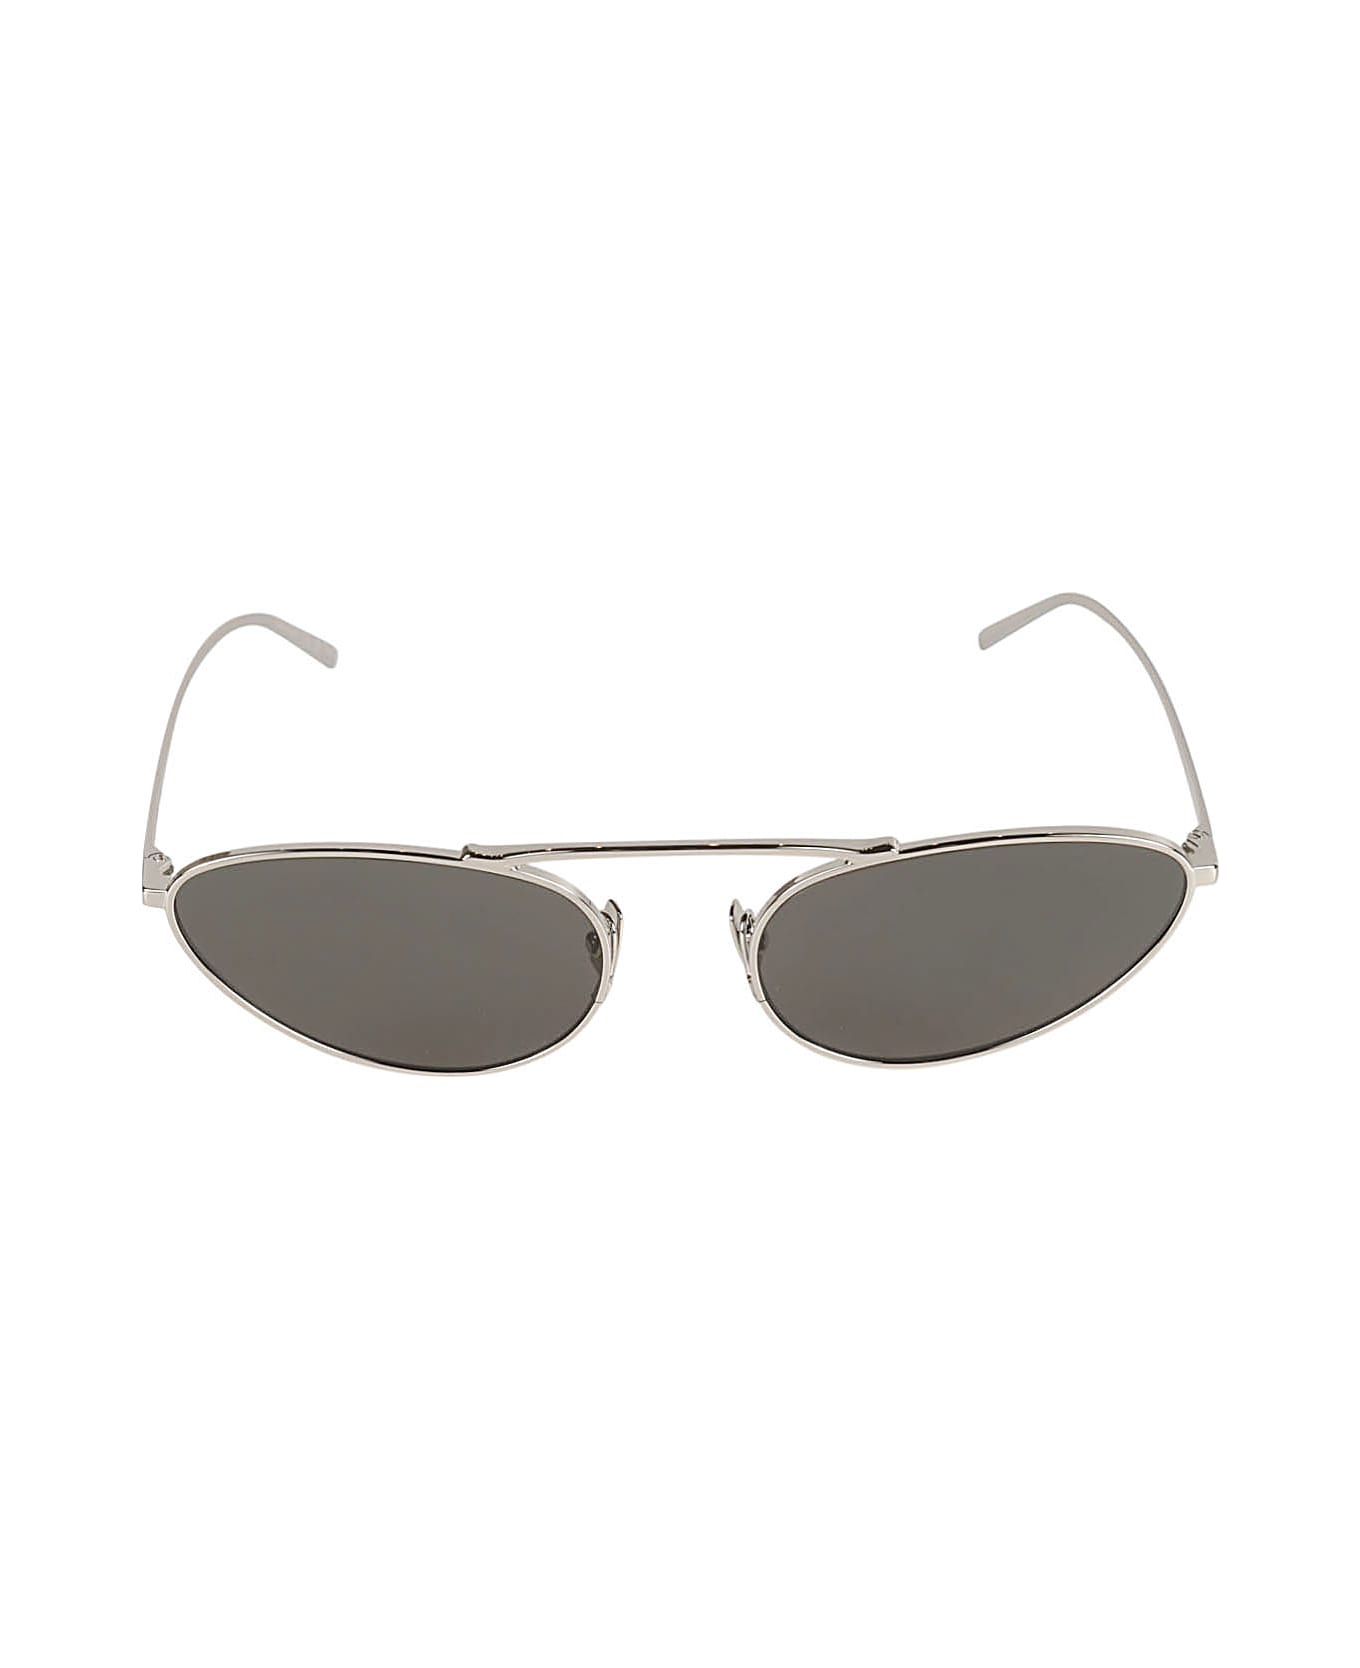 Saint Laurent Eyewear Oval Frame Sunglasses - Silver/Grey